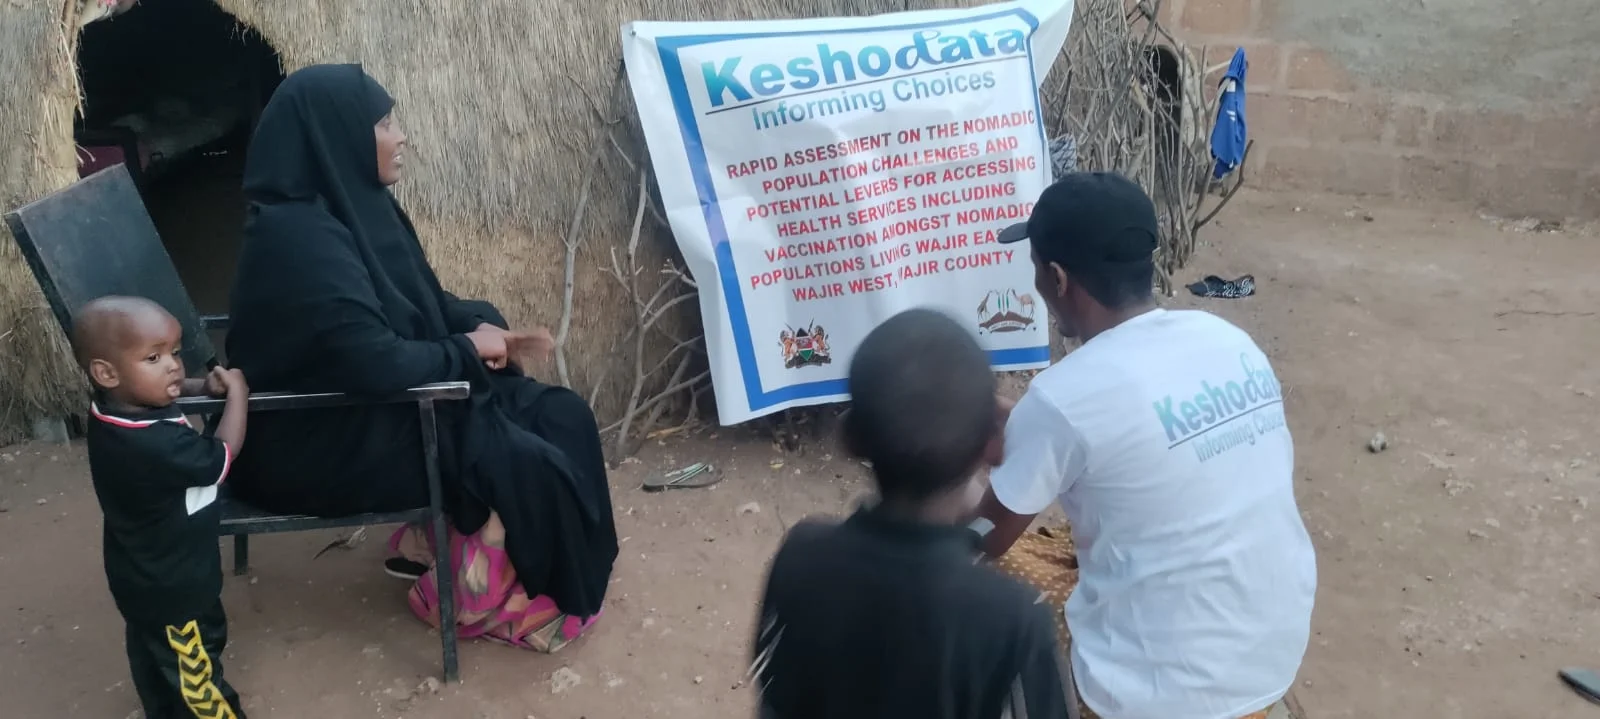 keshodata enumerators collecting data at field level